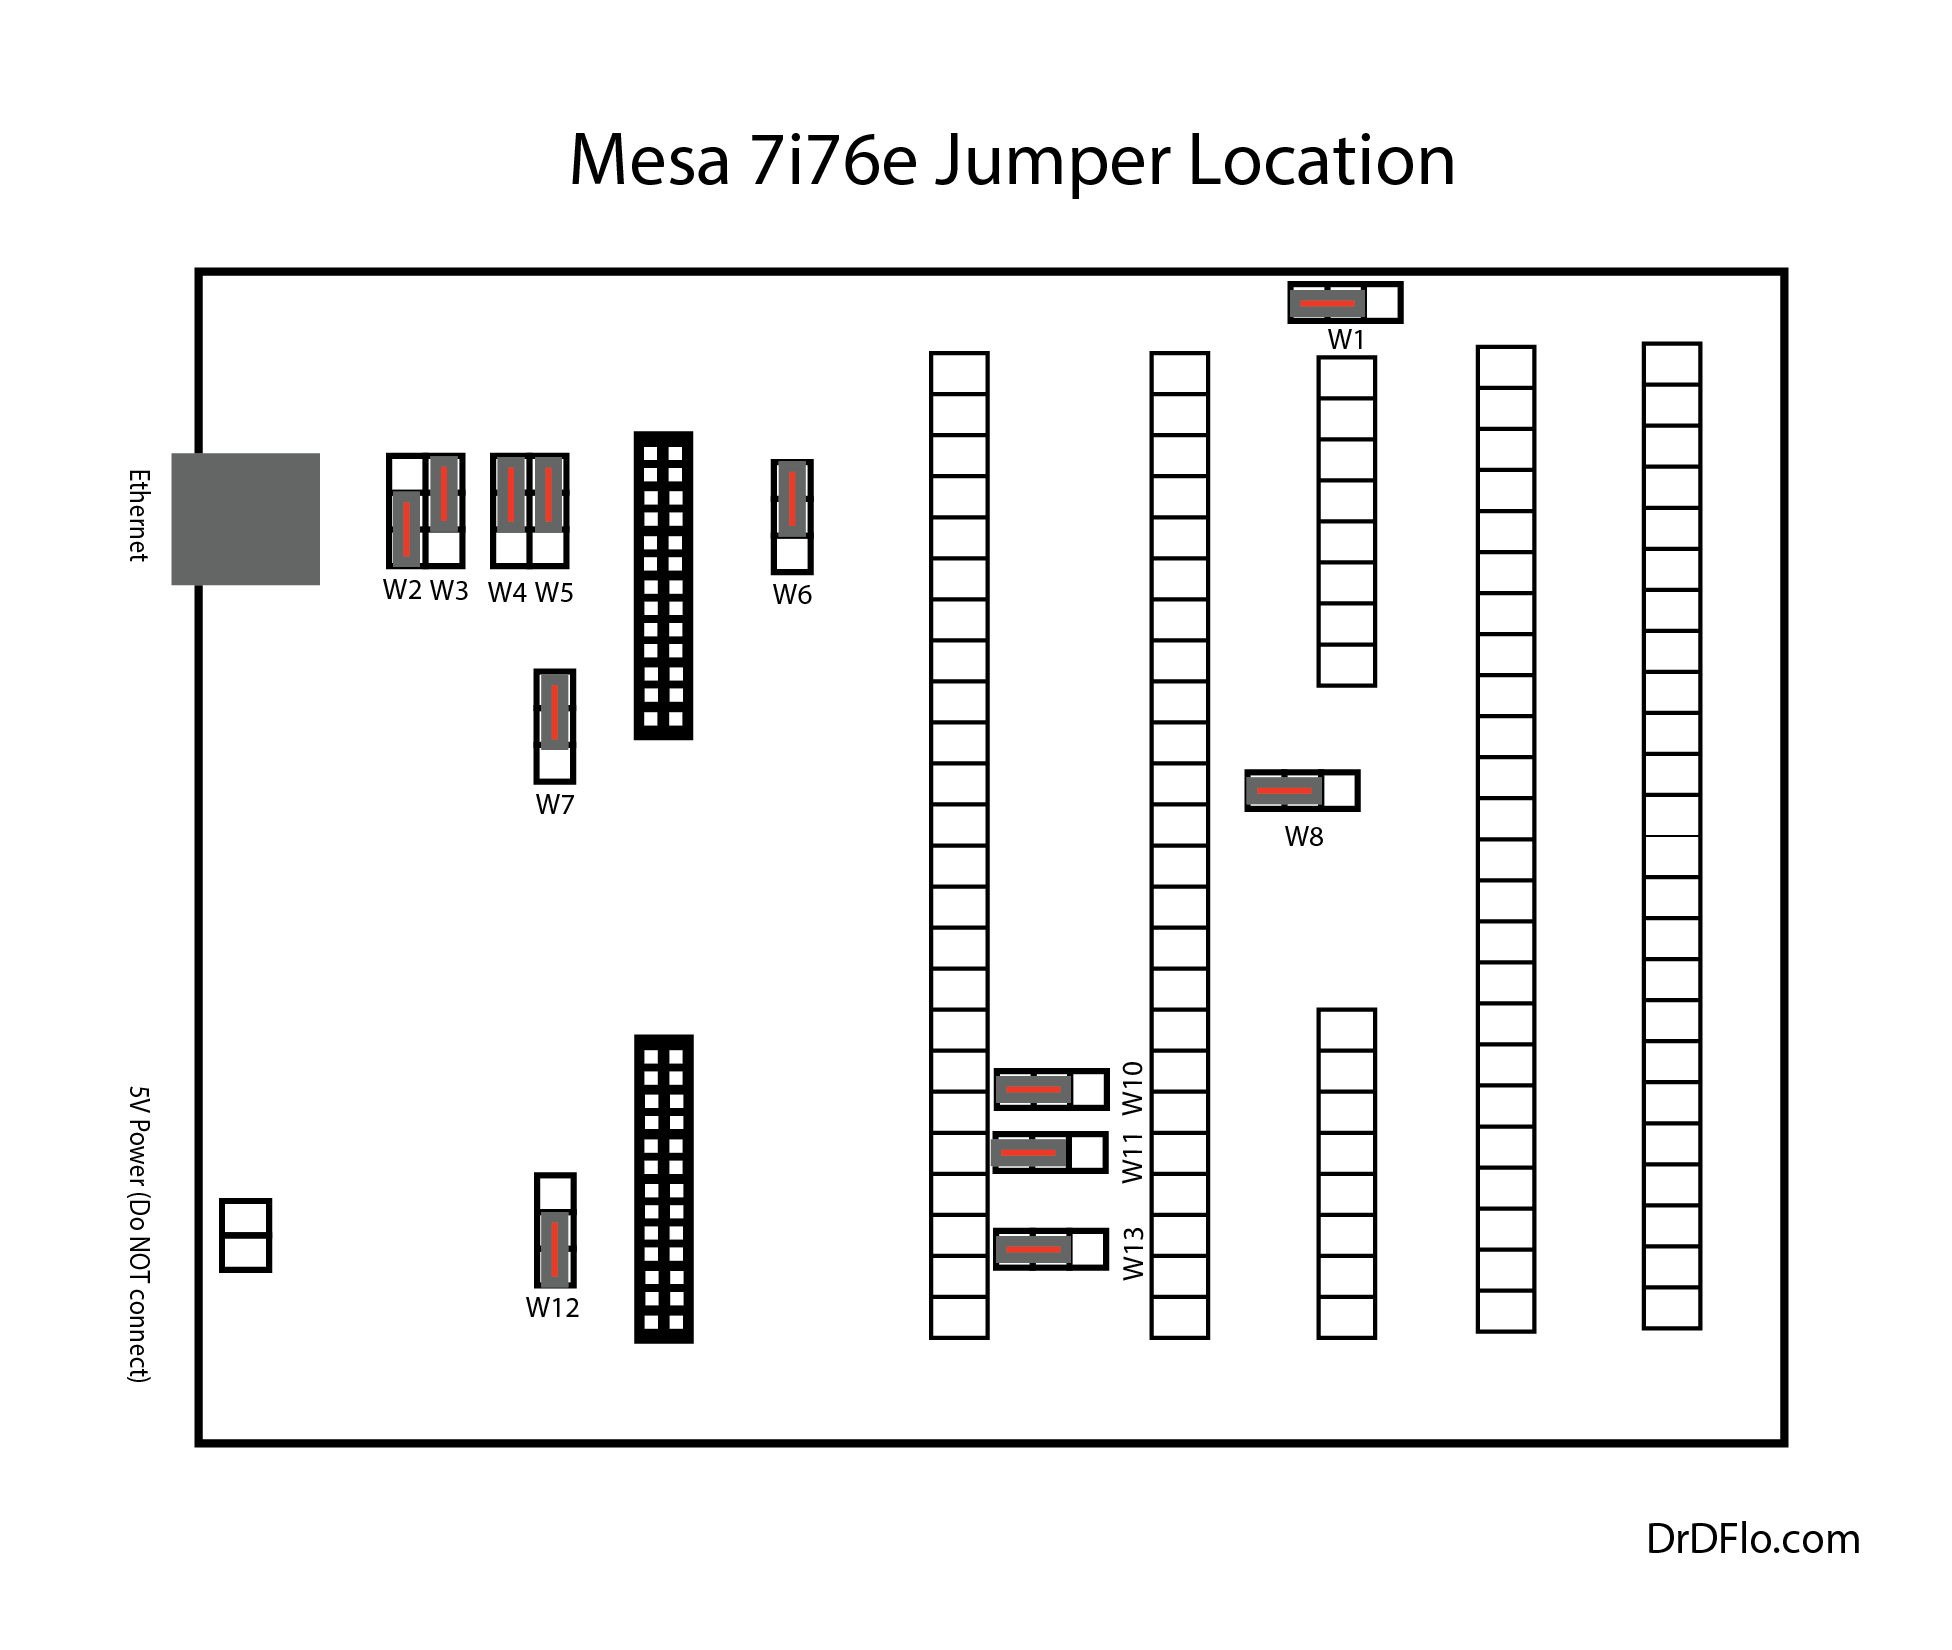 Mesa 7i76e jumper locations for the Mesa 7i76e